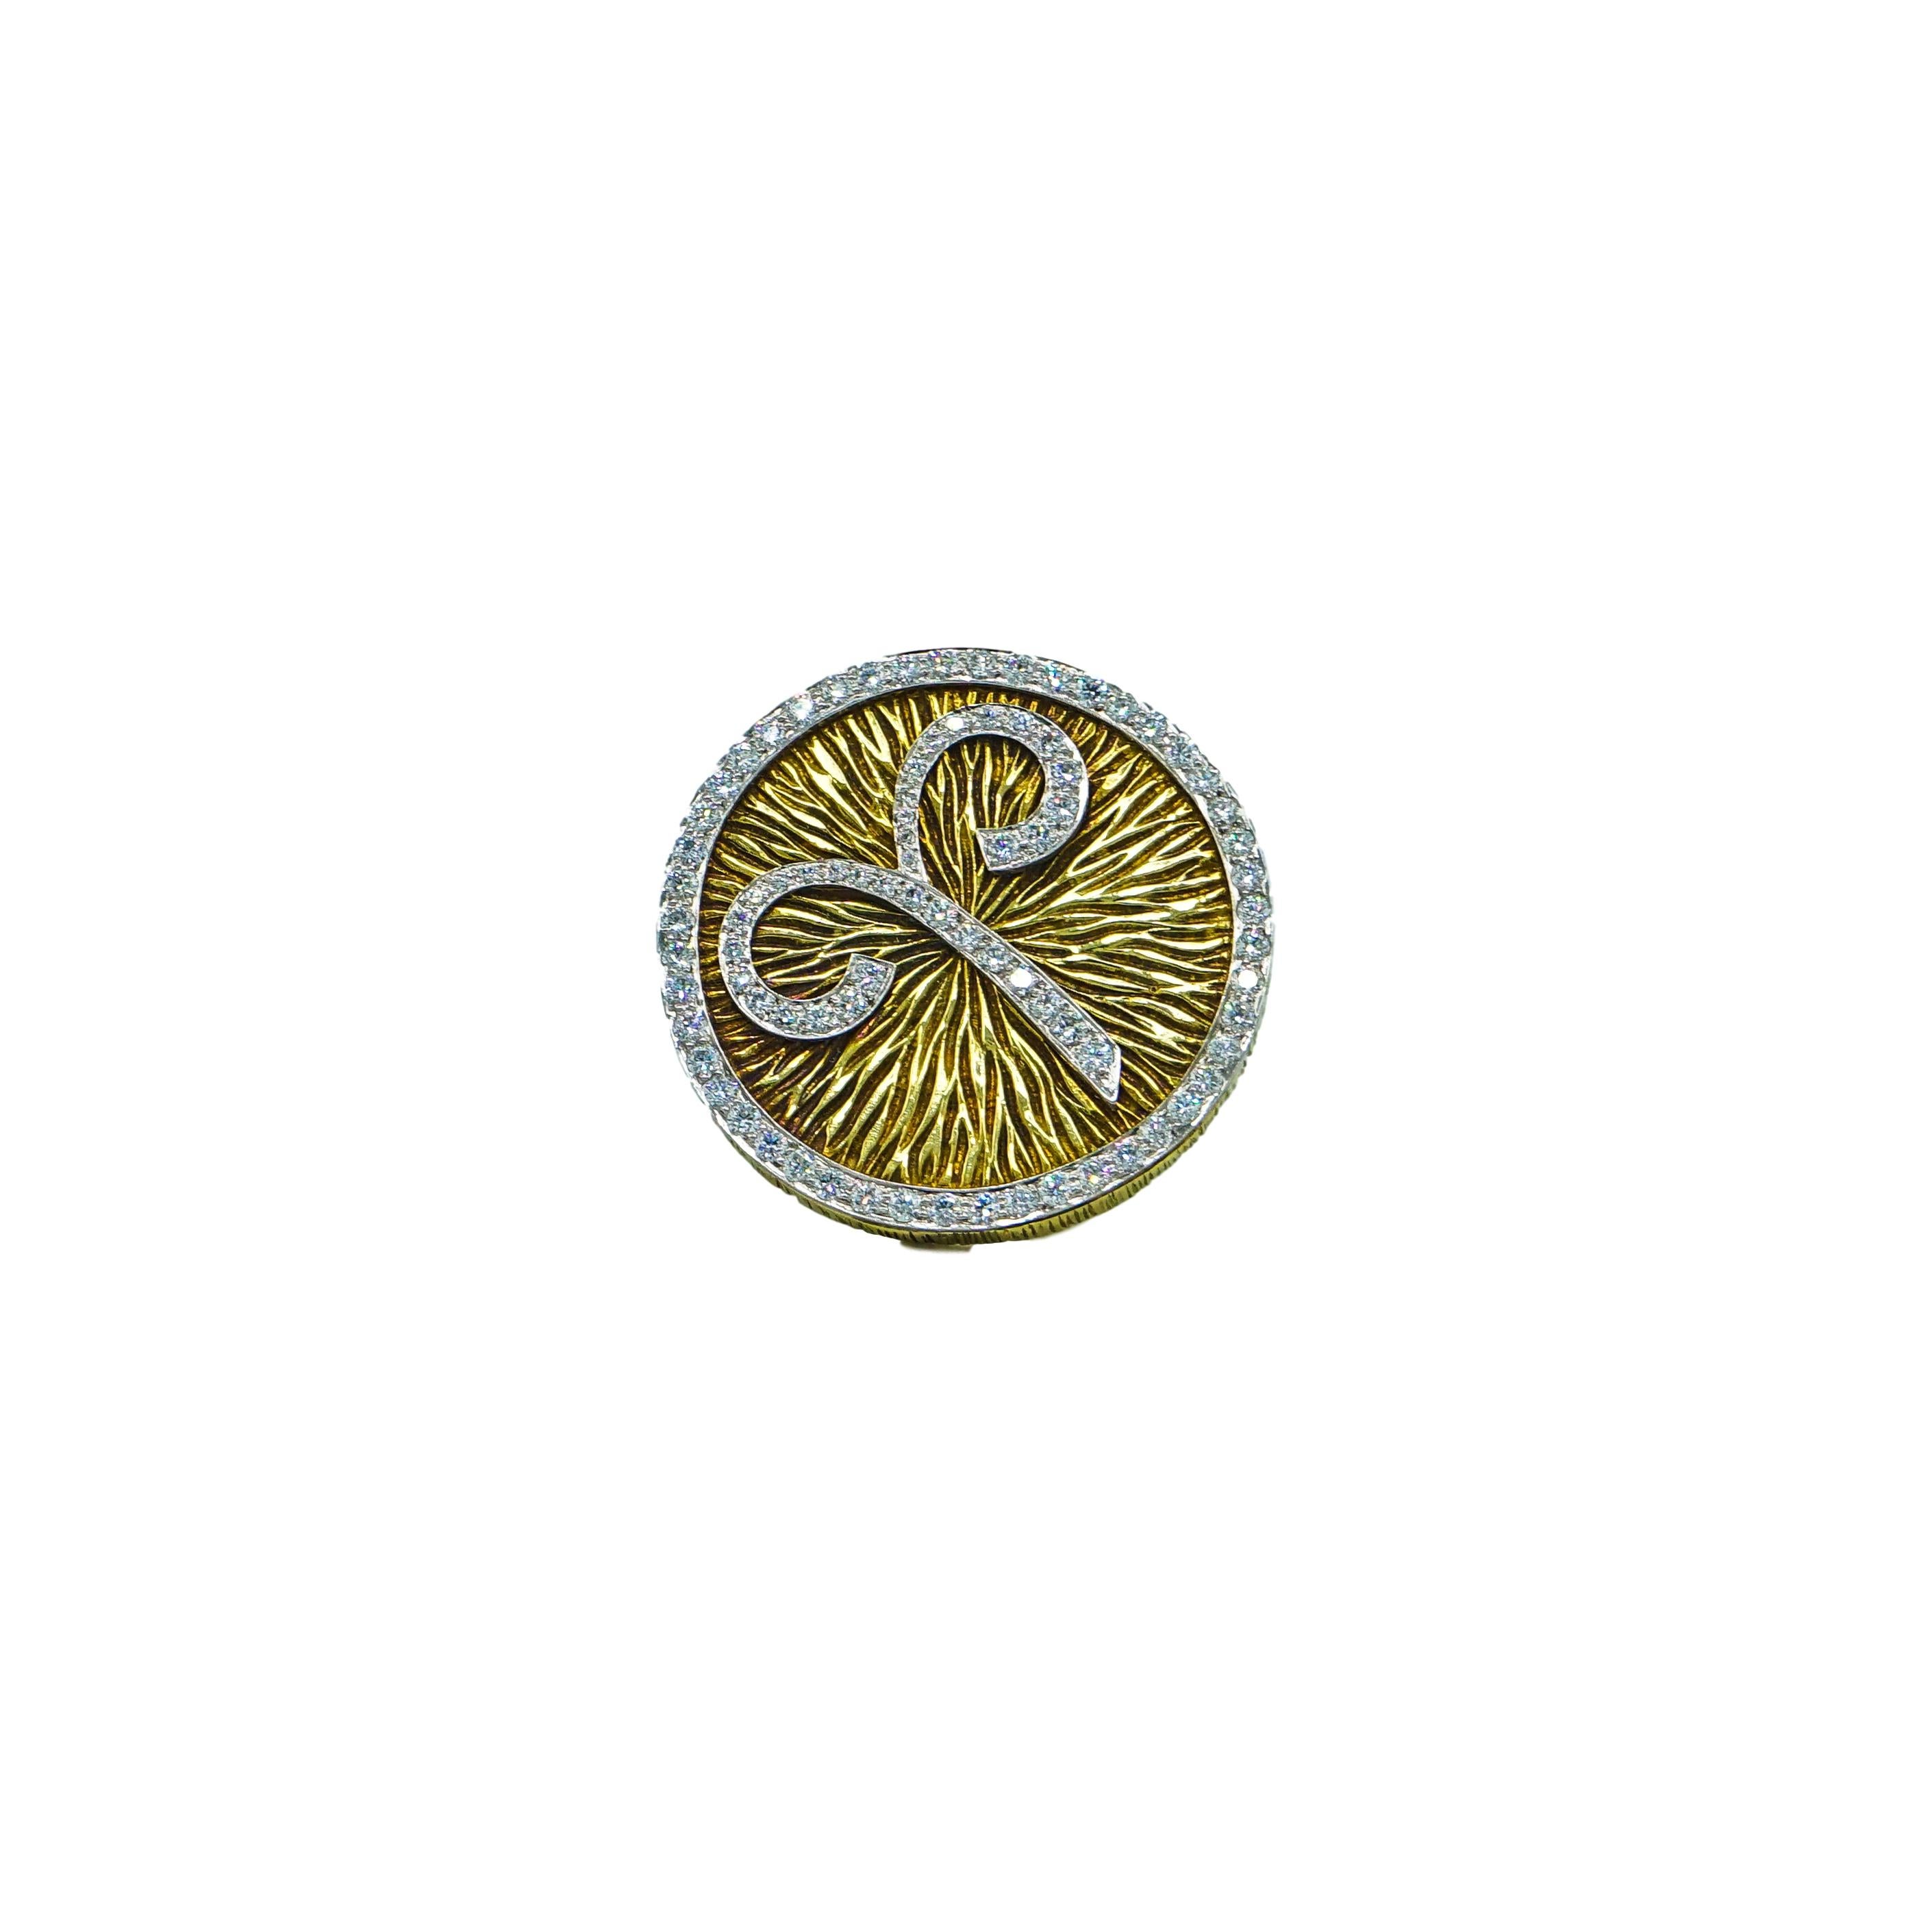 Contemporary David Webb Diamond and Gold Zodiac Pendant for Aries